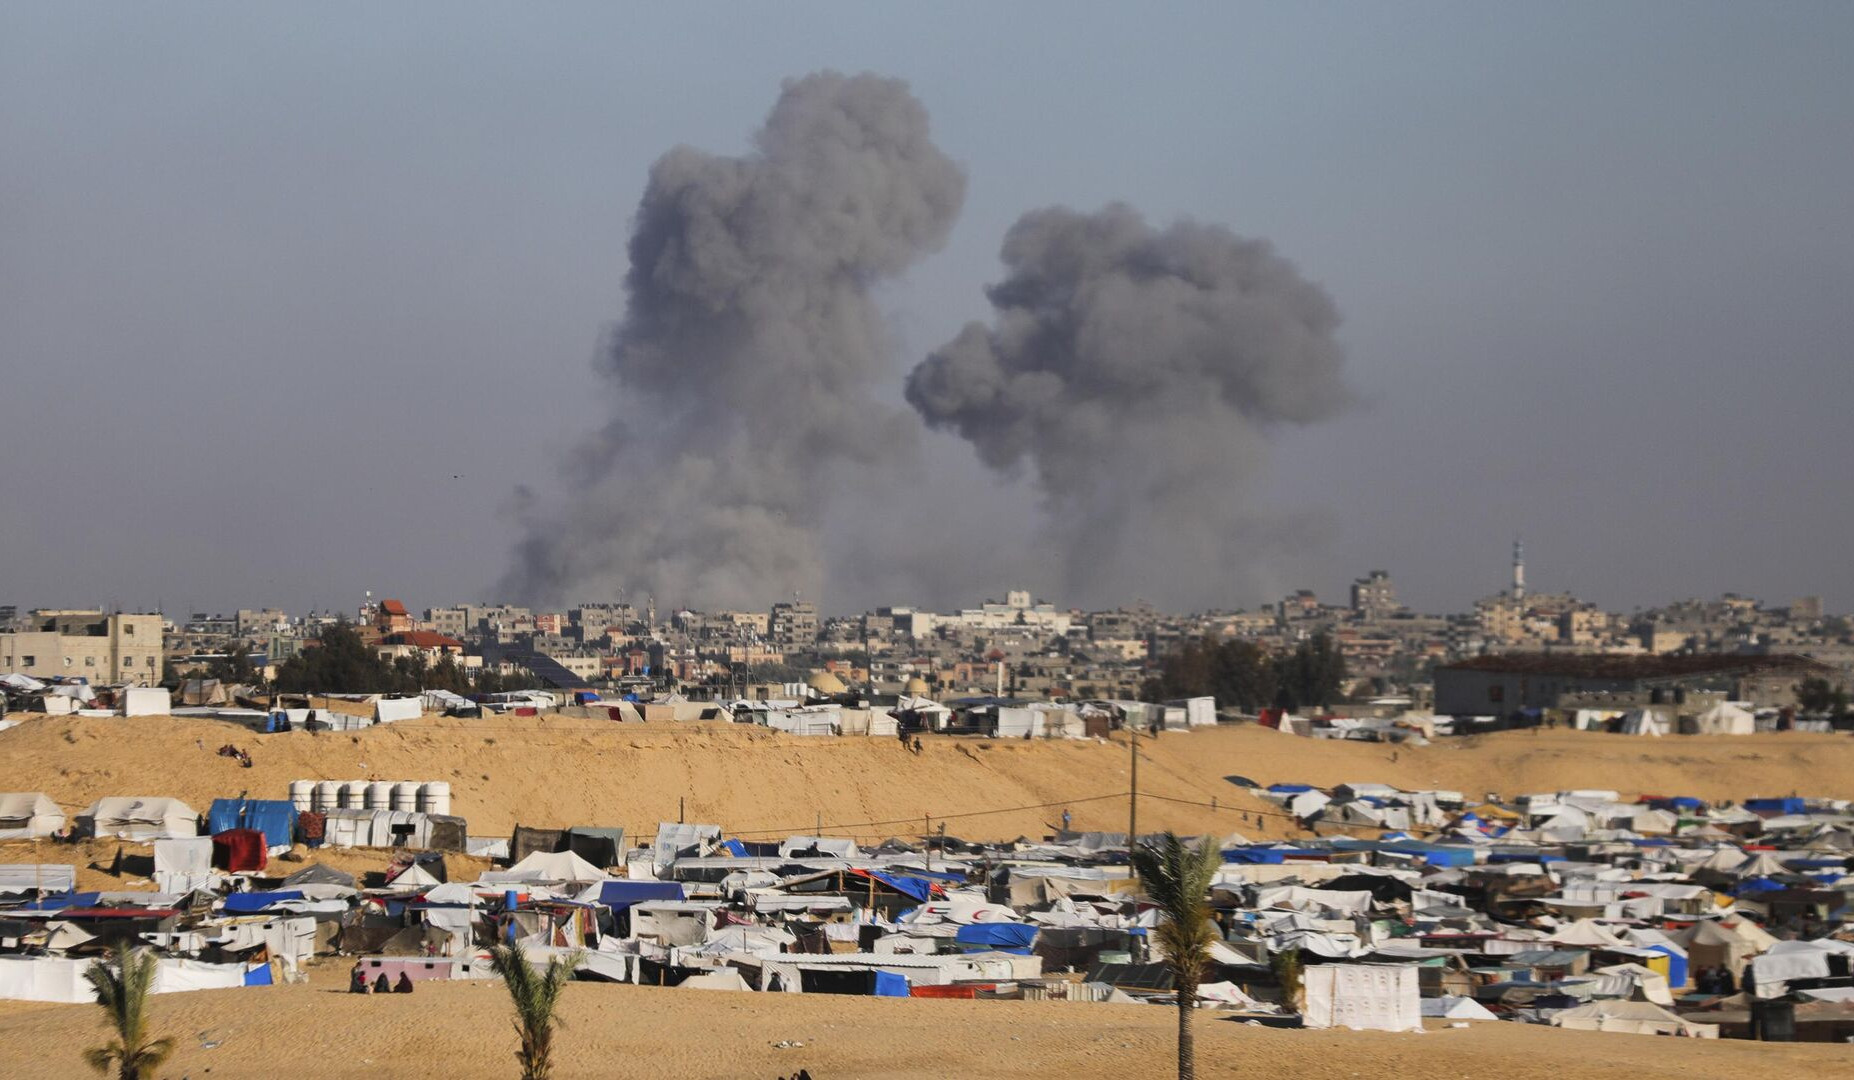 Hamas welcomes UN Security Council resolution for Gaza ceasefire